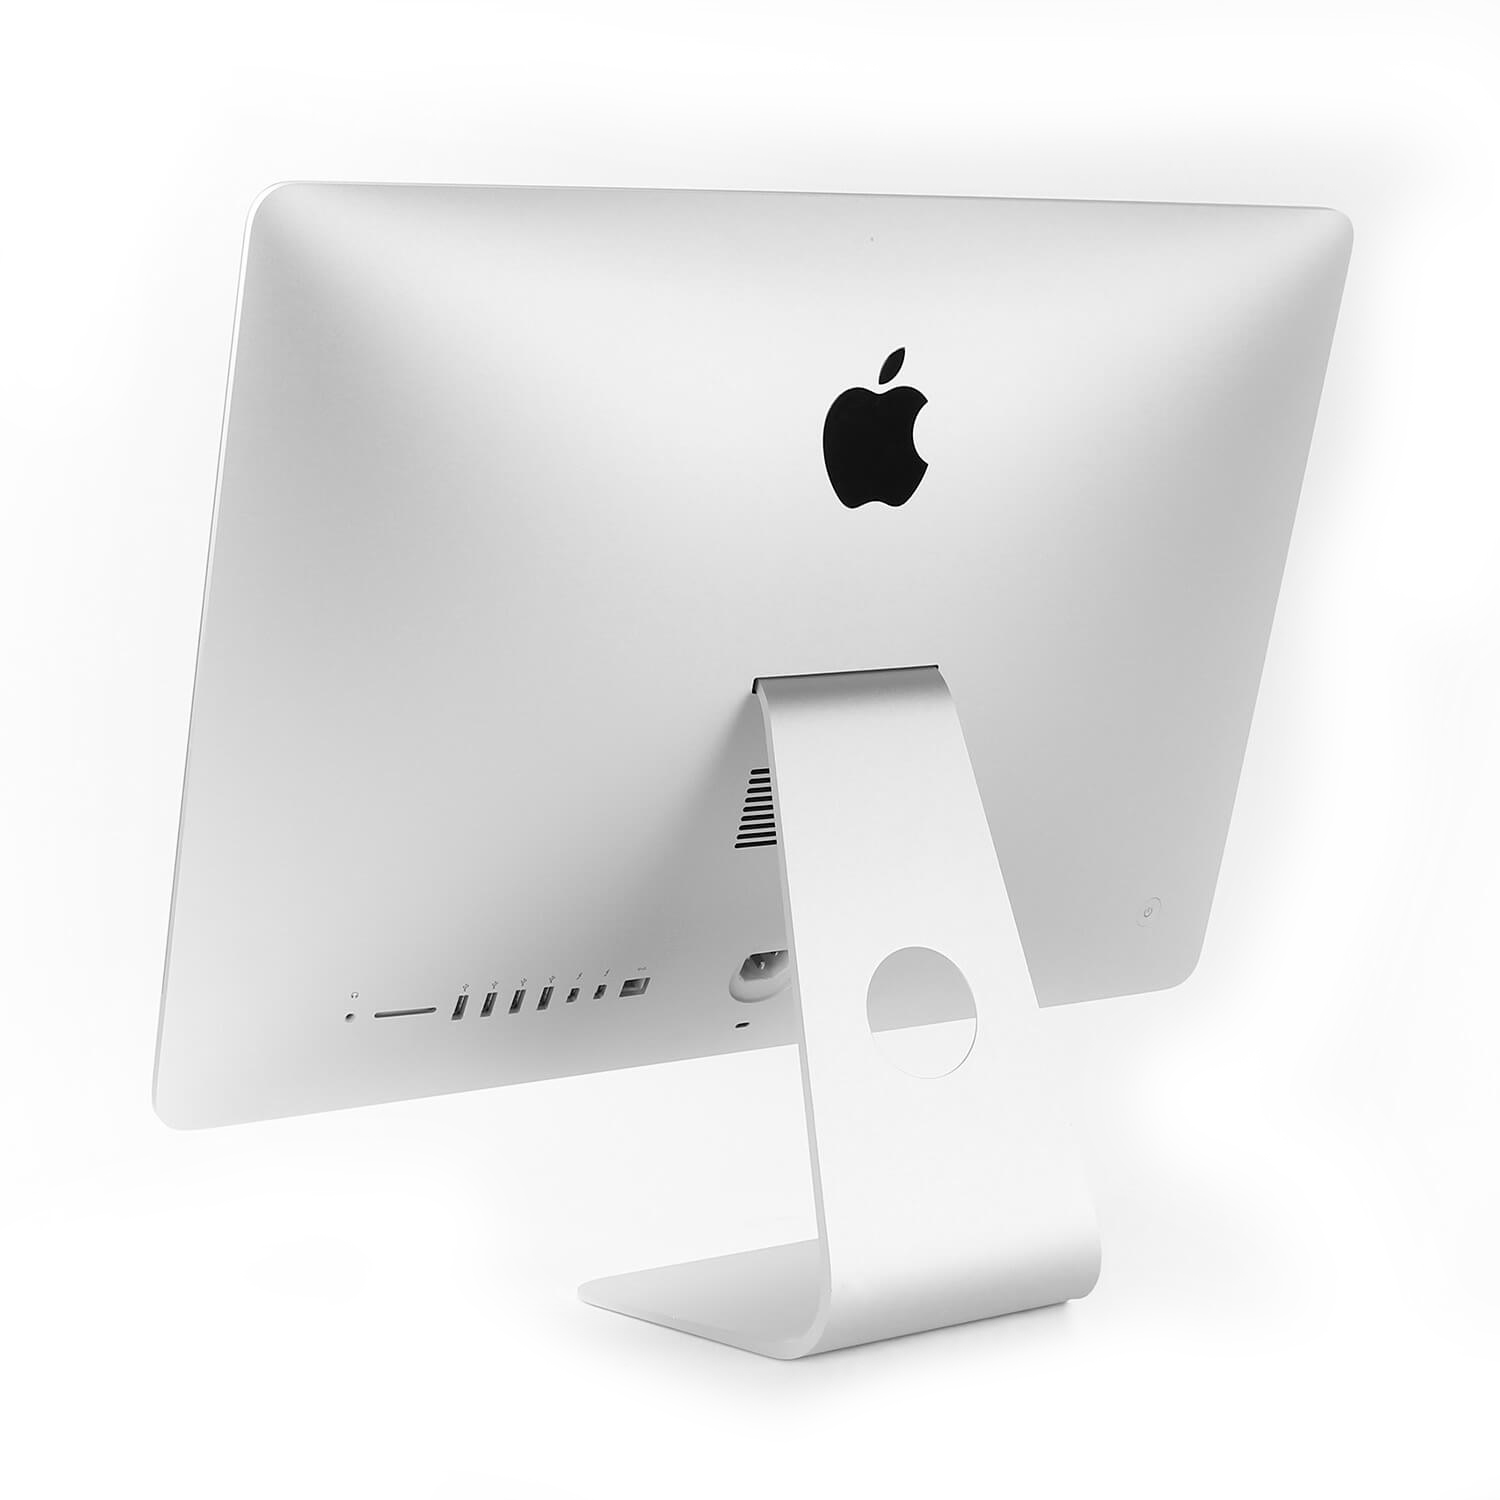 Restored Apple iMac 21.5 AIO Desktop Computer Intel Quad Core i5 8GB 1TB - MK442LL/A (Refurbished) - image 5 of 5